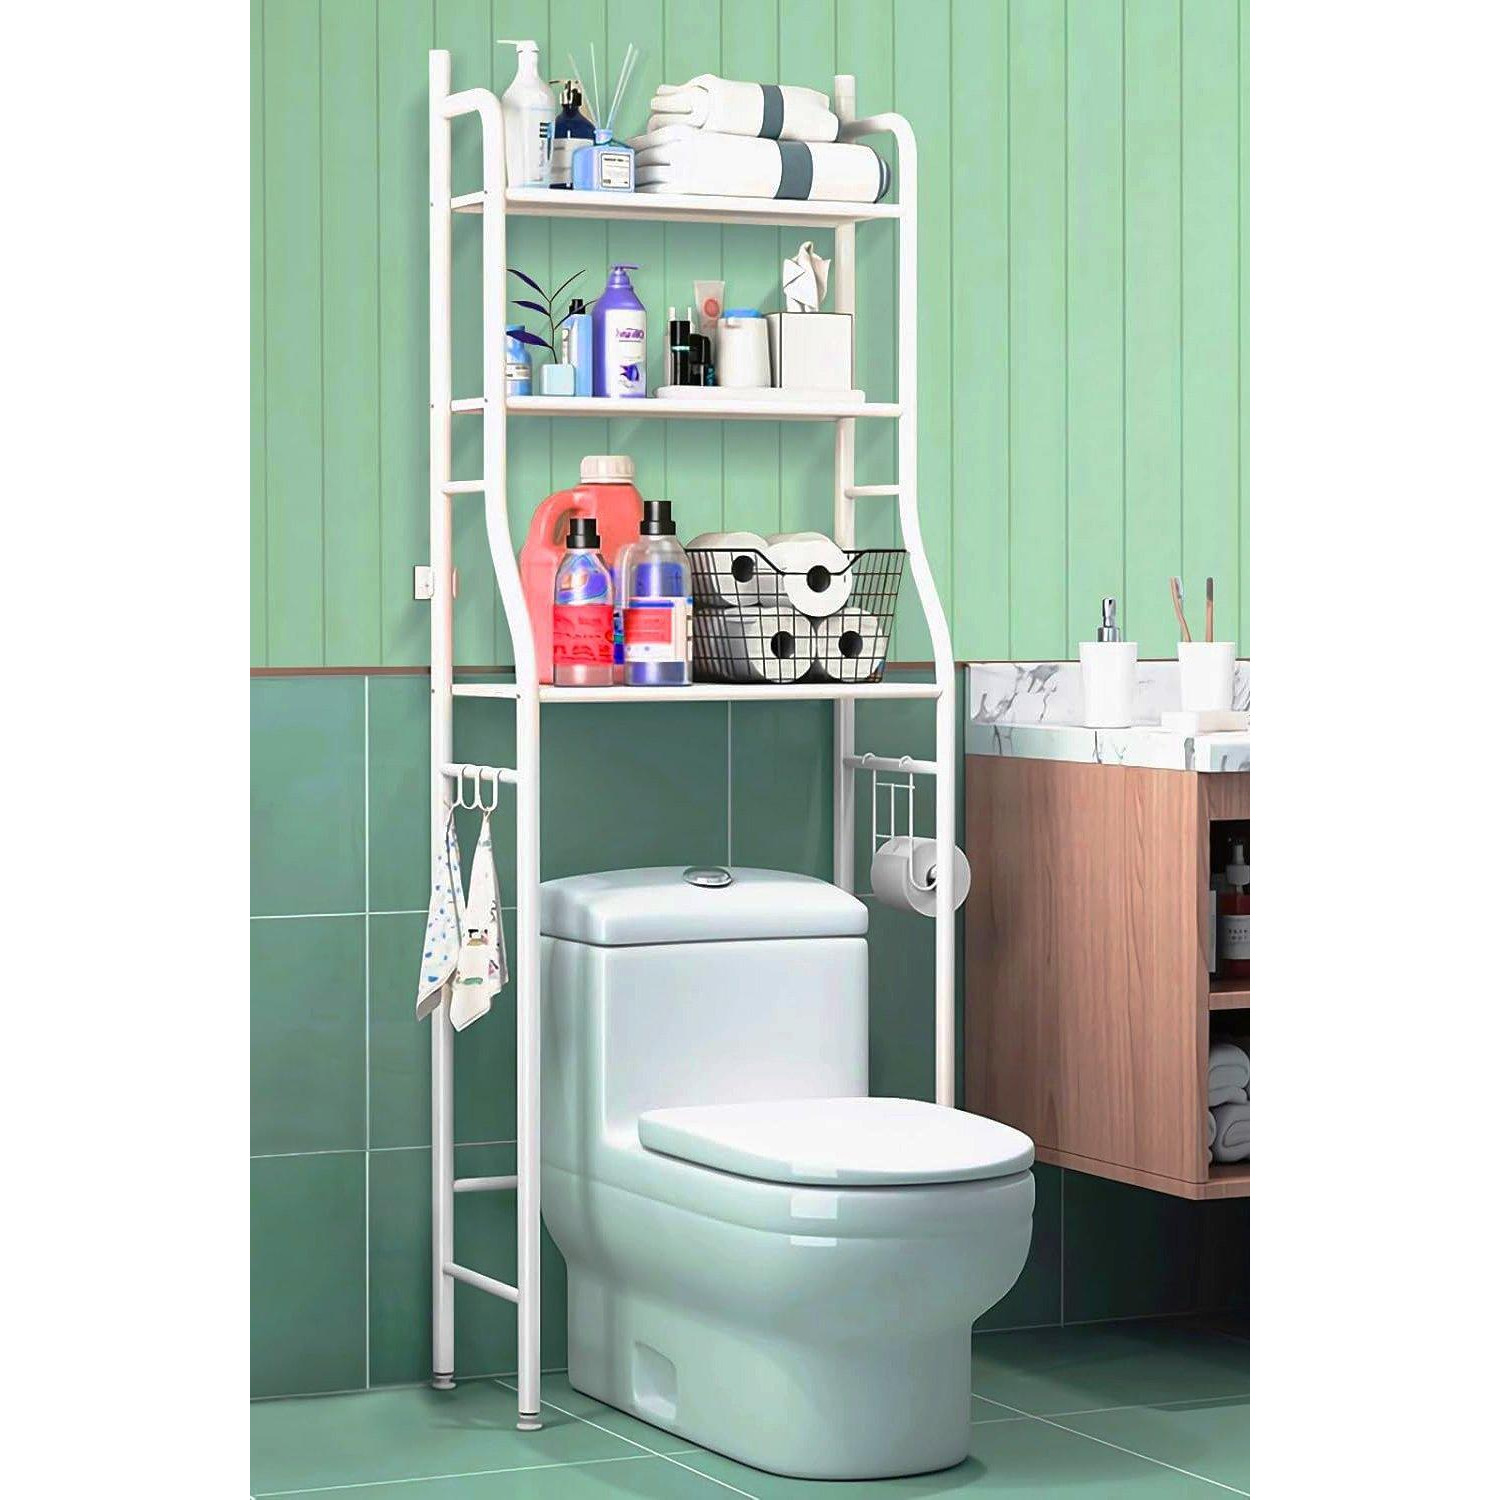 3 Tiers Metal Bathroom Organizer Over Toilet Rack Storage Shelves White - image 1